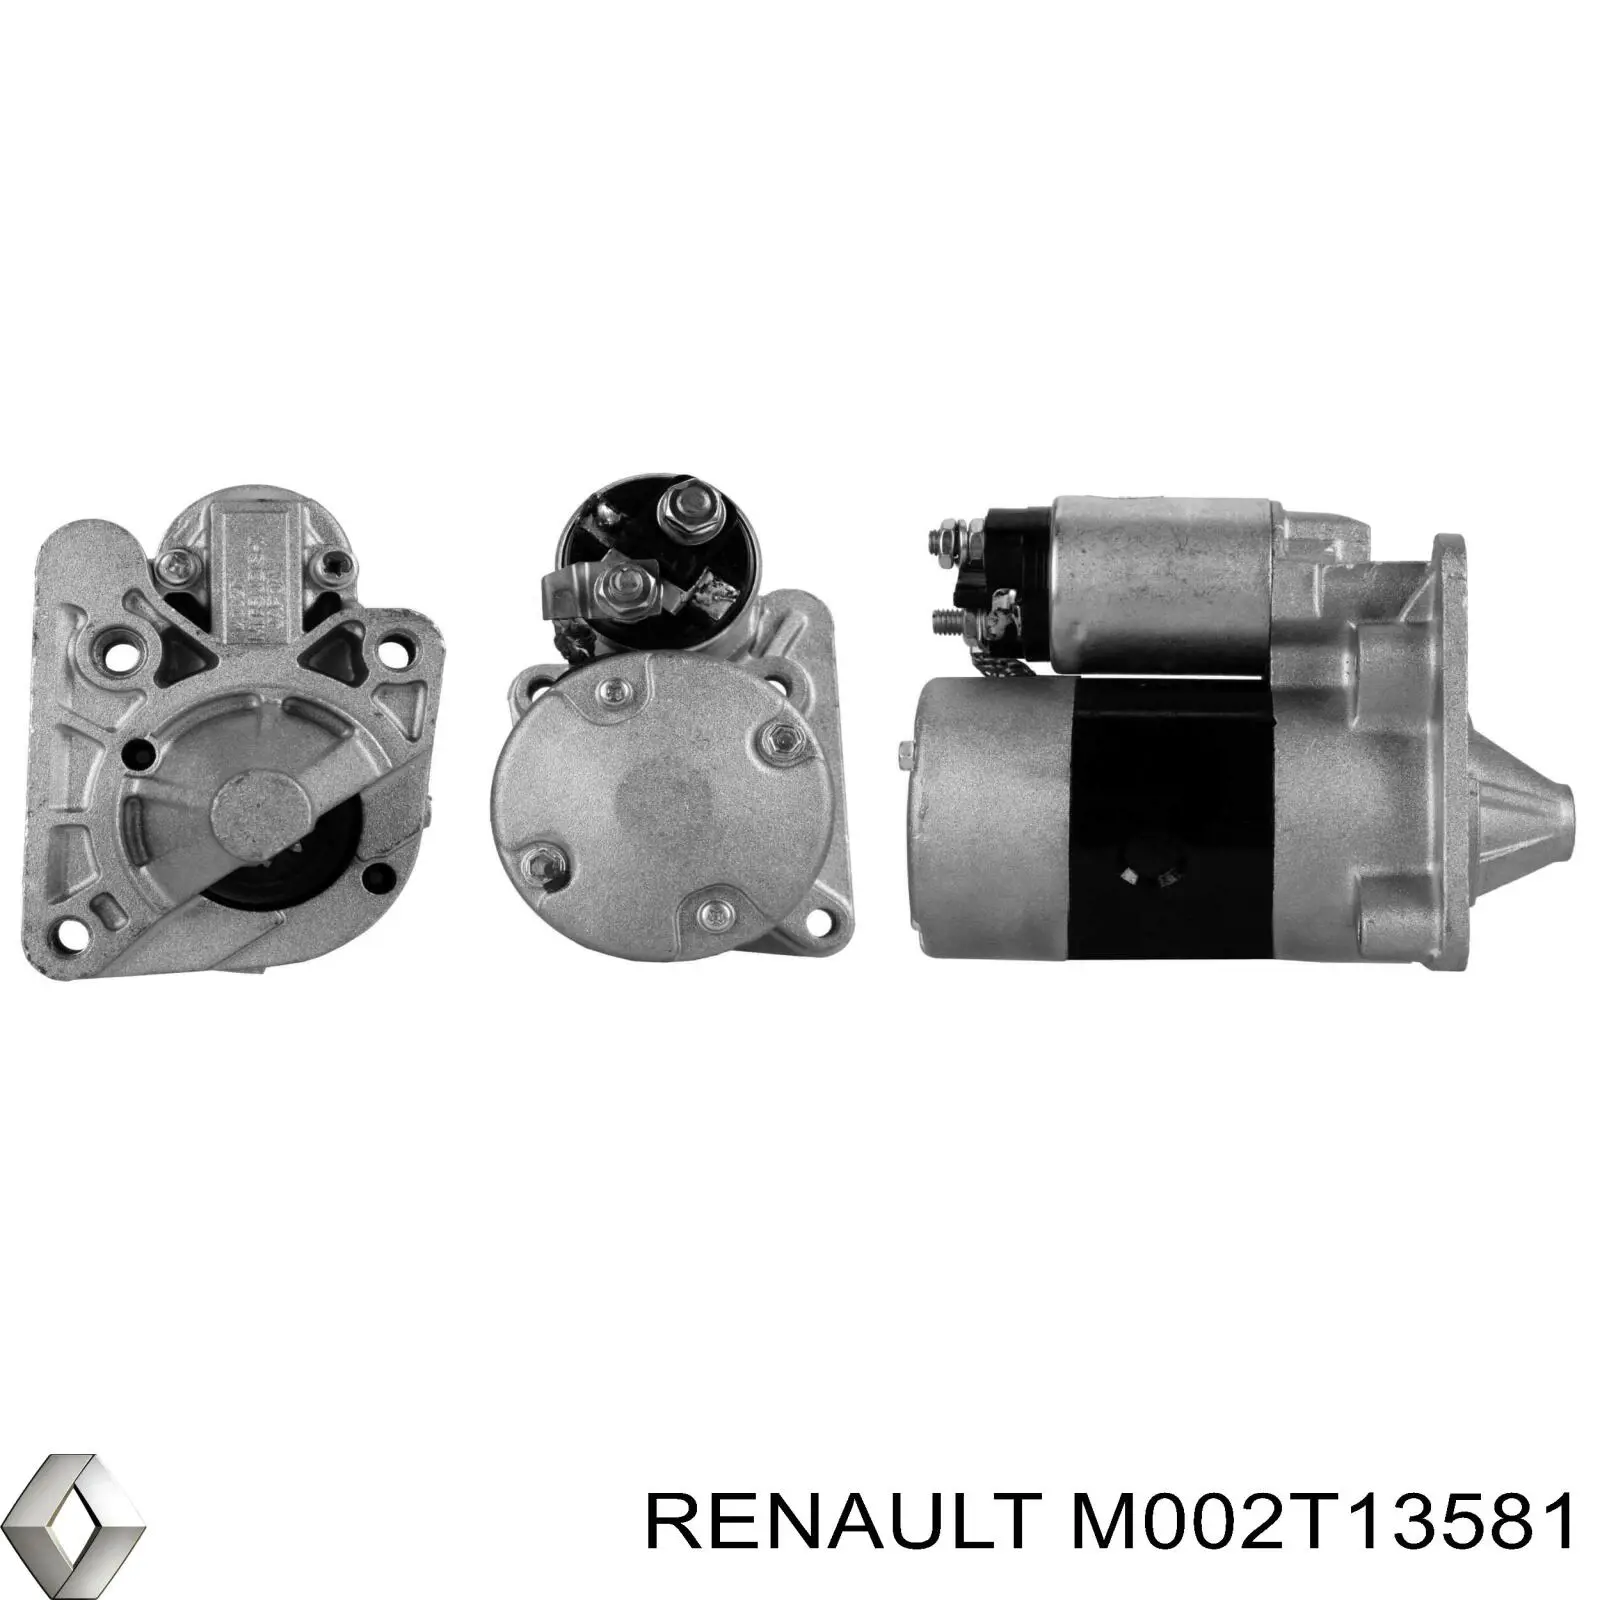 M002T13581 Renault (RVI) motor de arranque